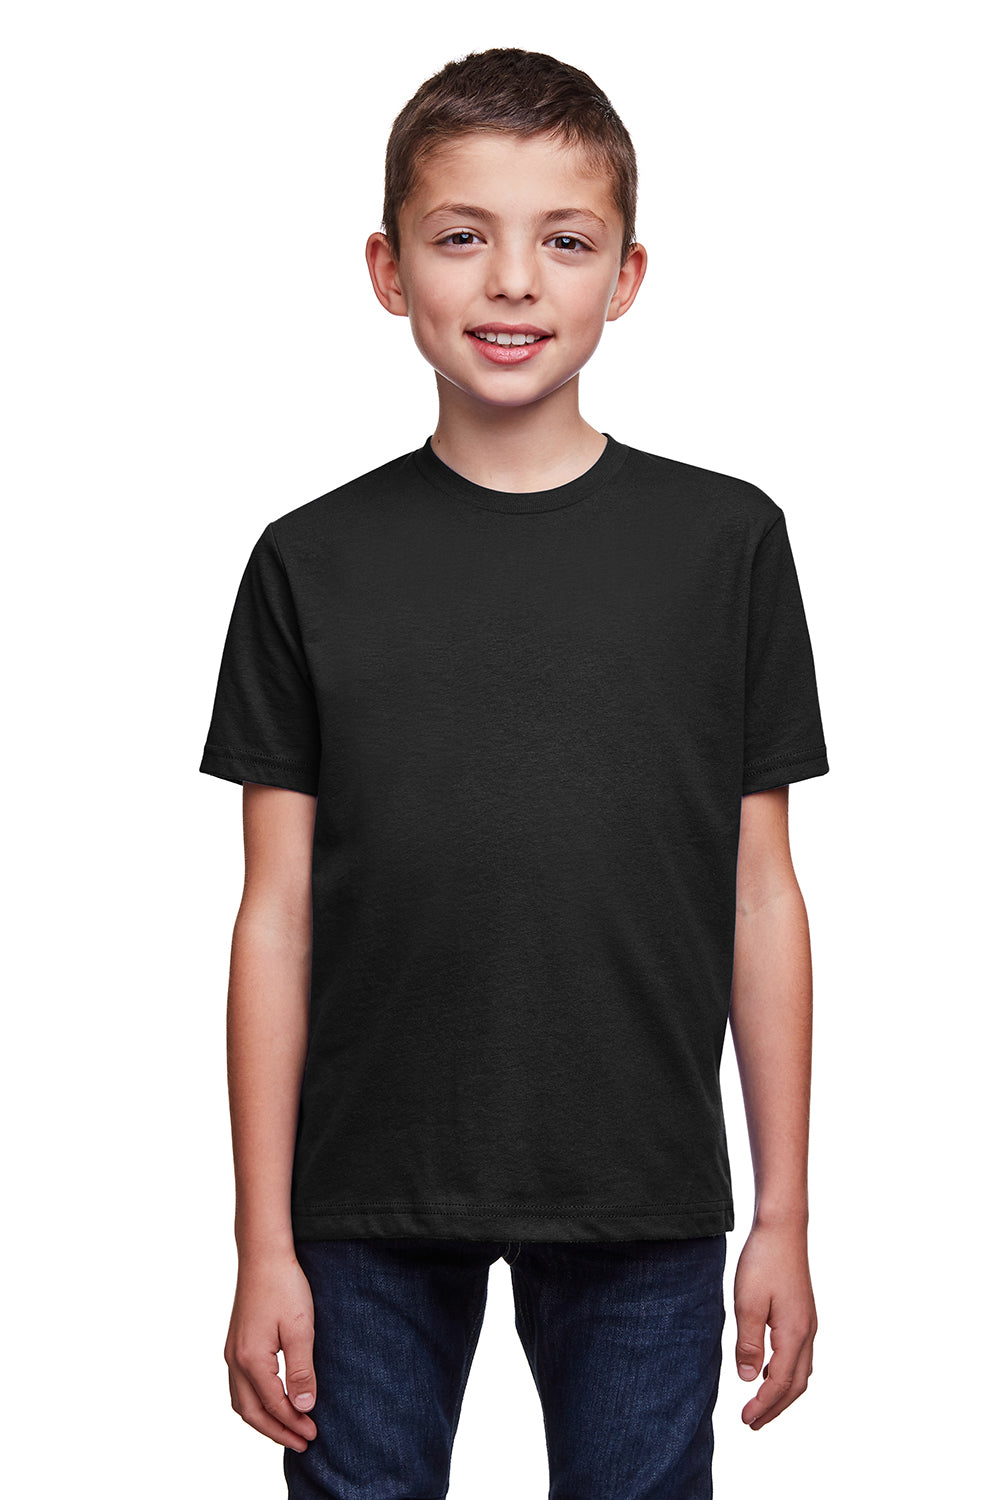 Next Level 4212 Youth Eco Performance Moisture Wicking Short Sleeve Crewneck T-Shirt Black Front